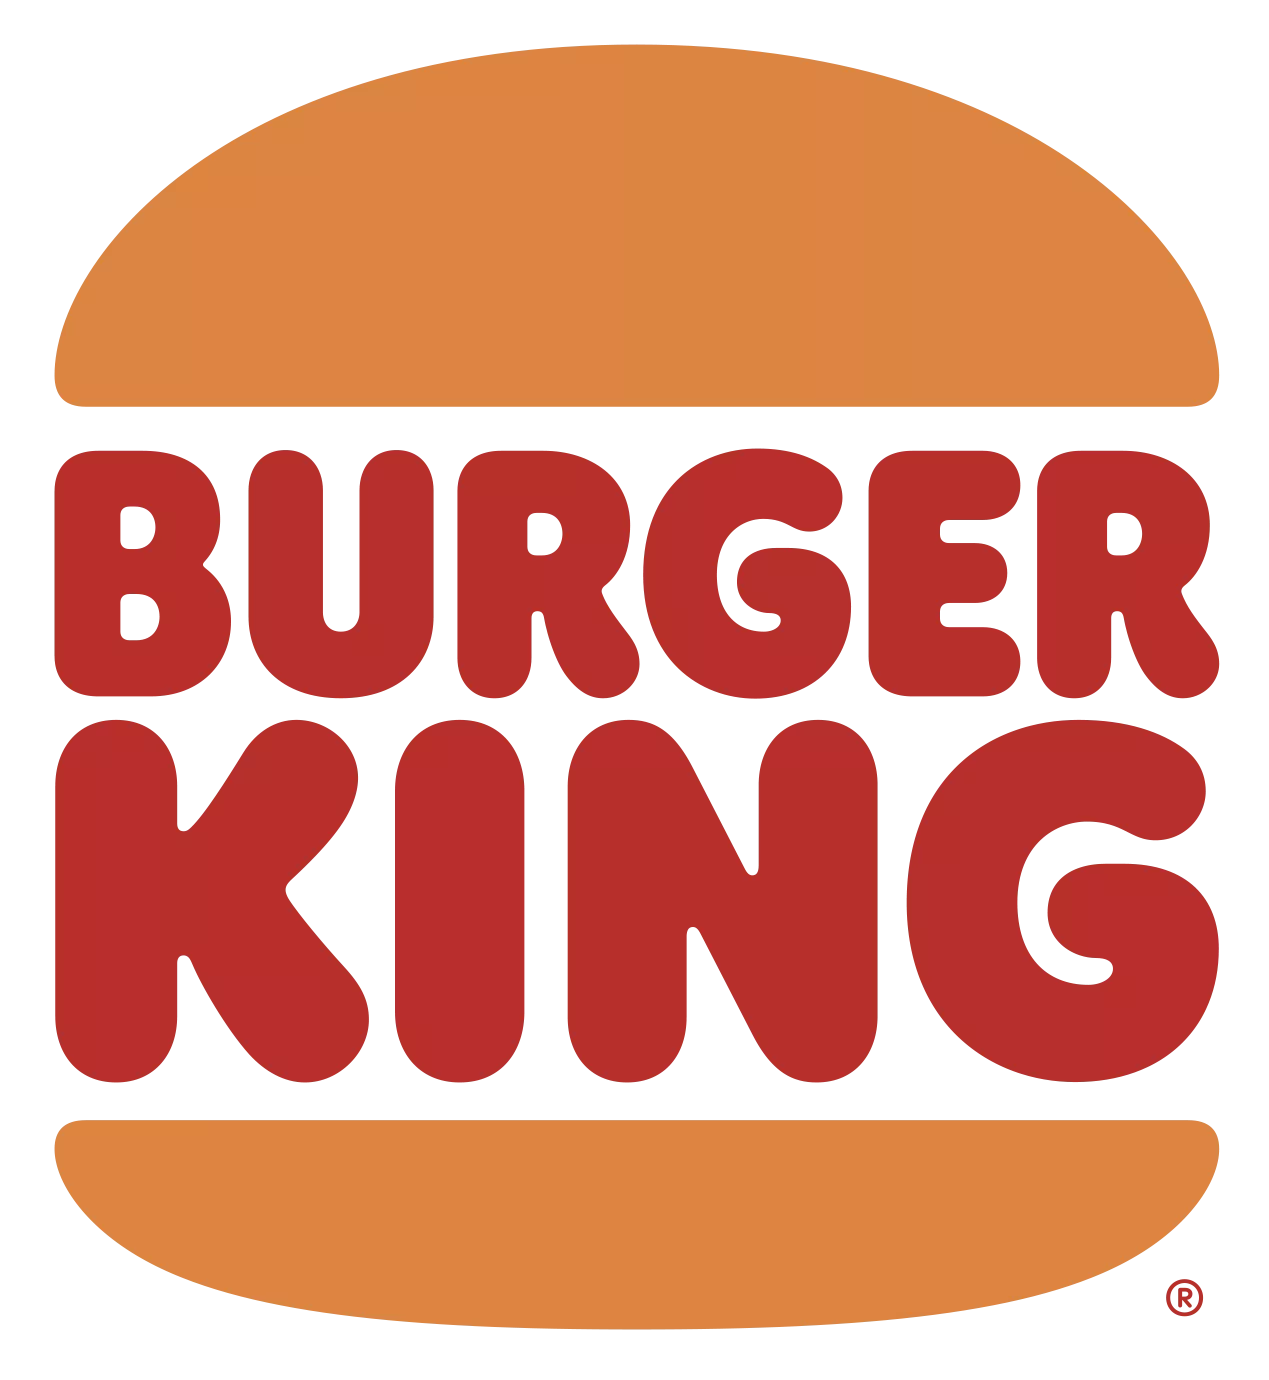 Sponzor - Burger king